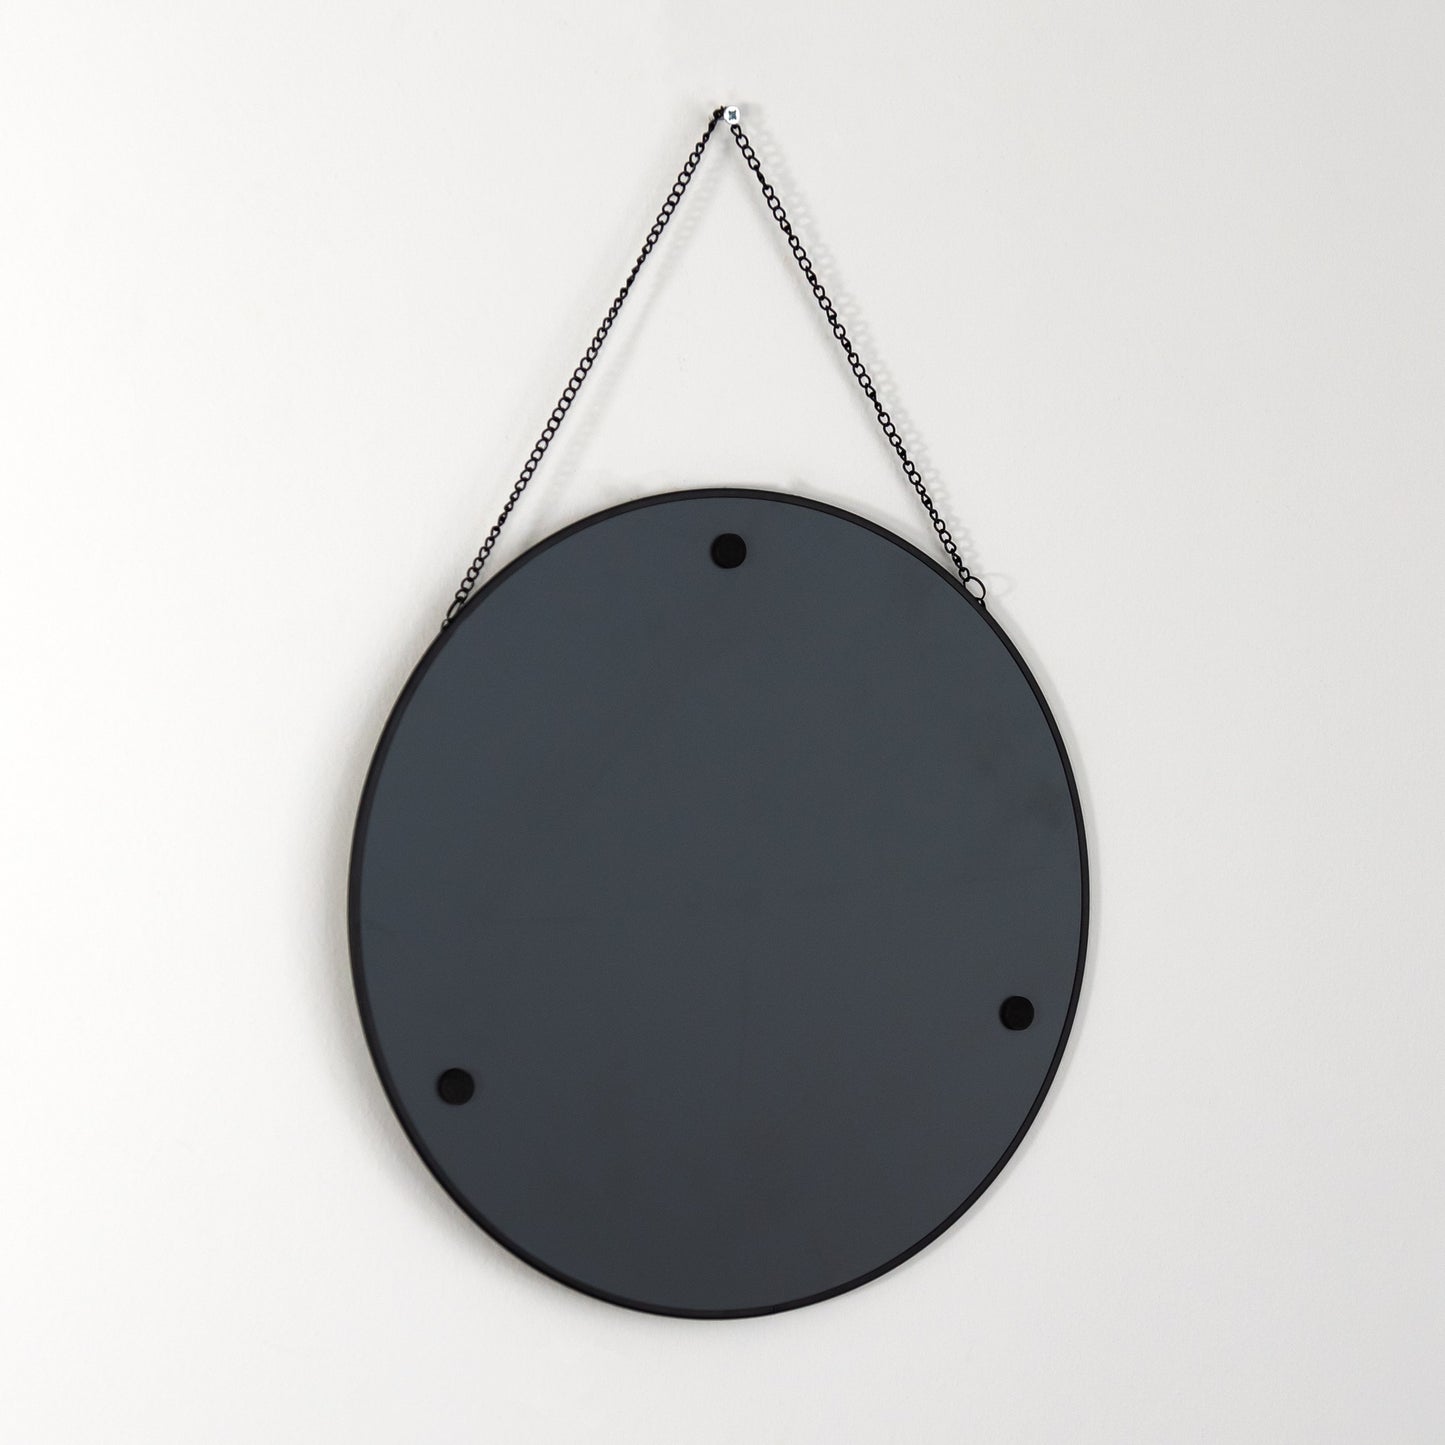 30cm Round Black Chain Wall Hanging Mirror